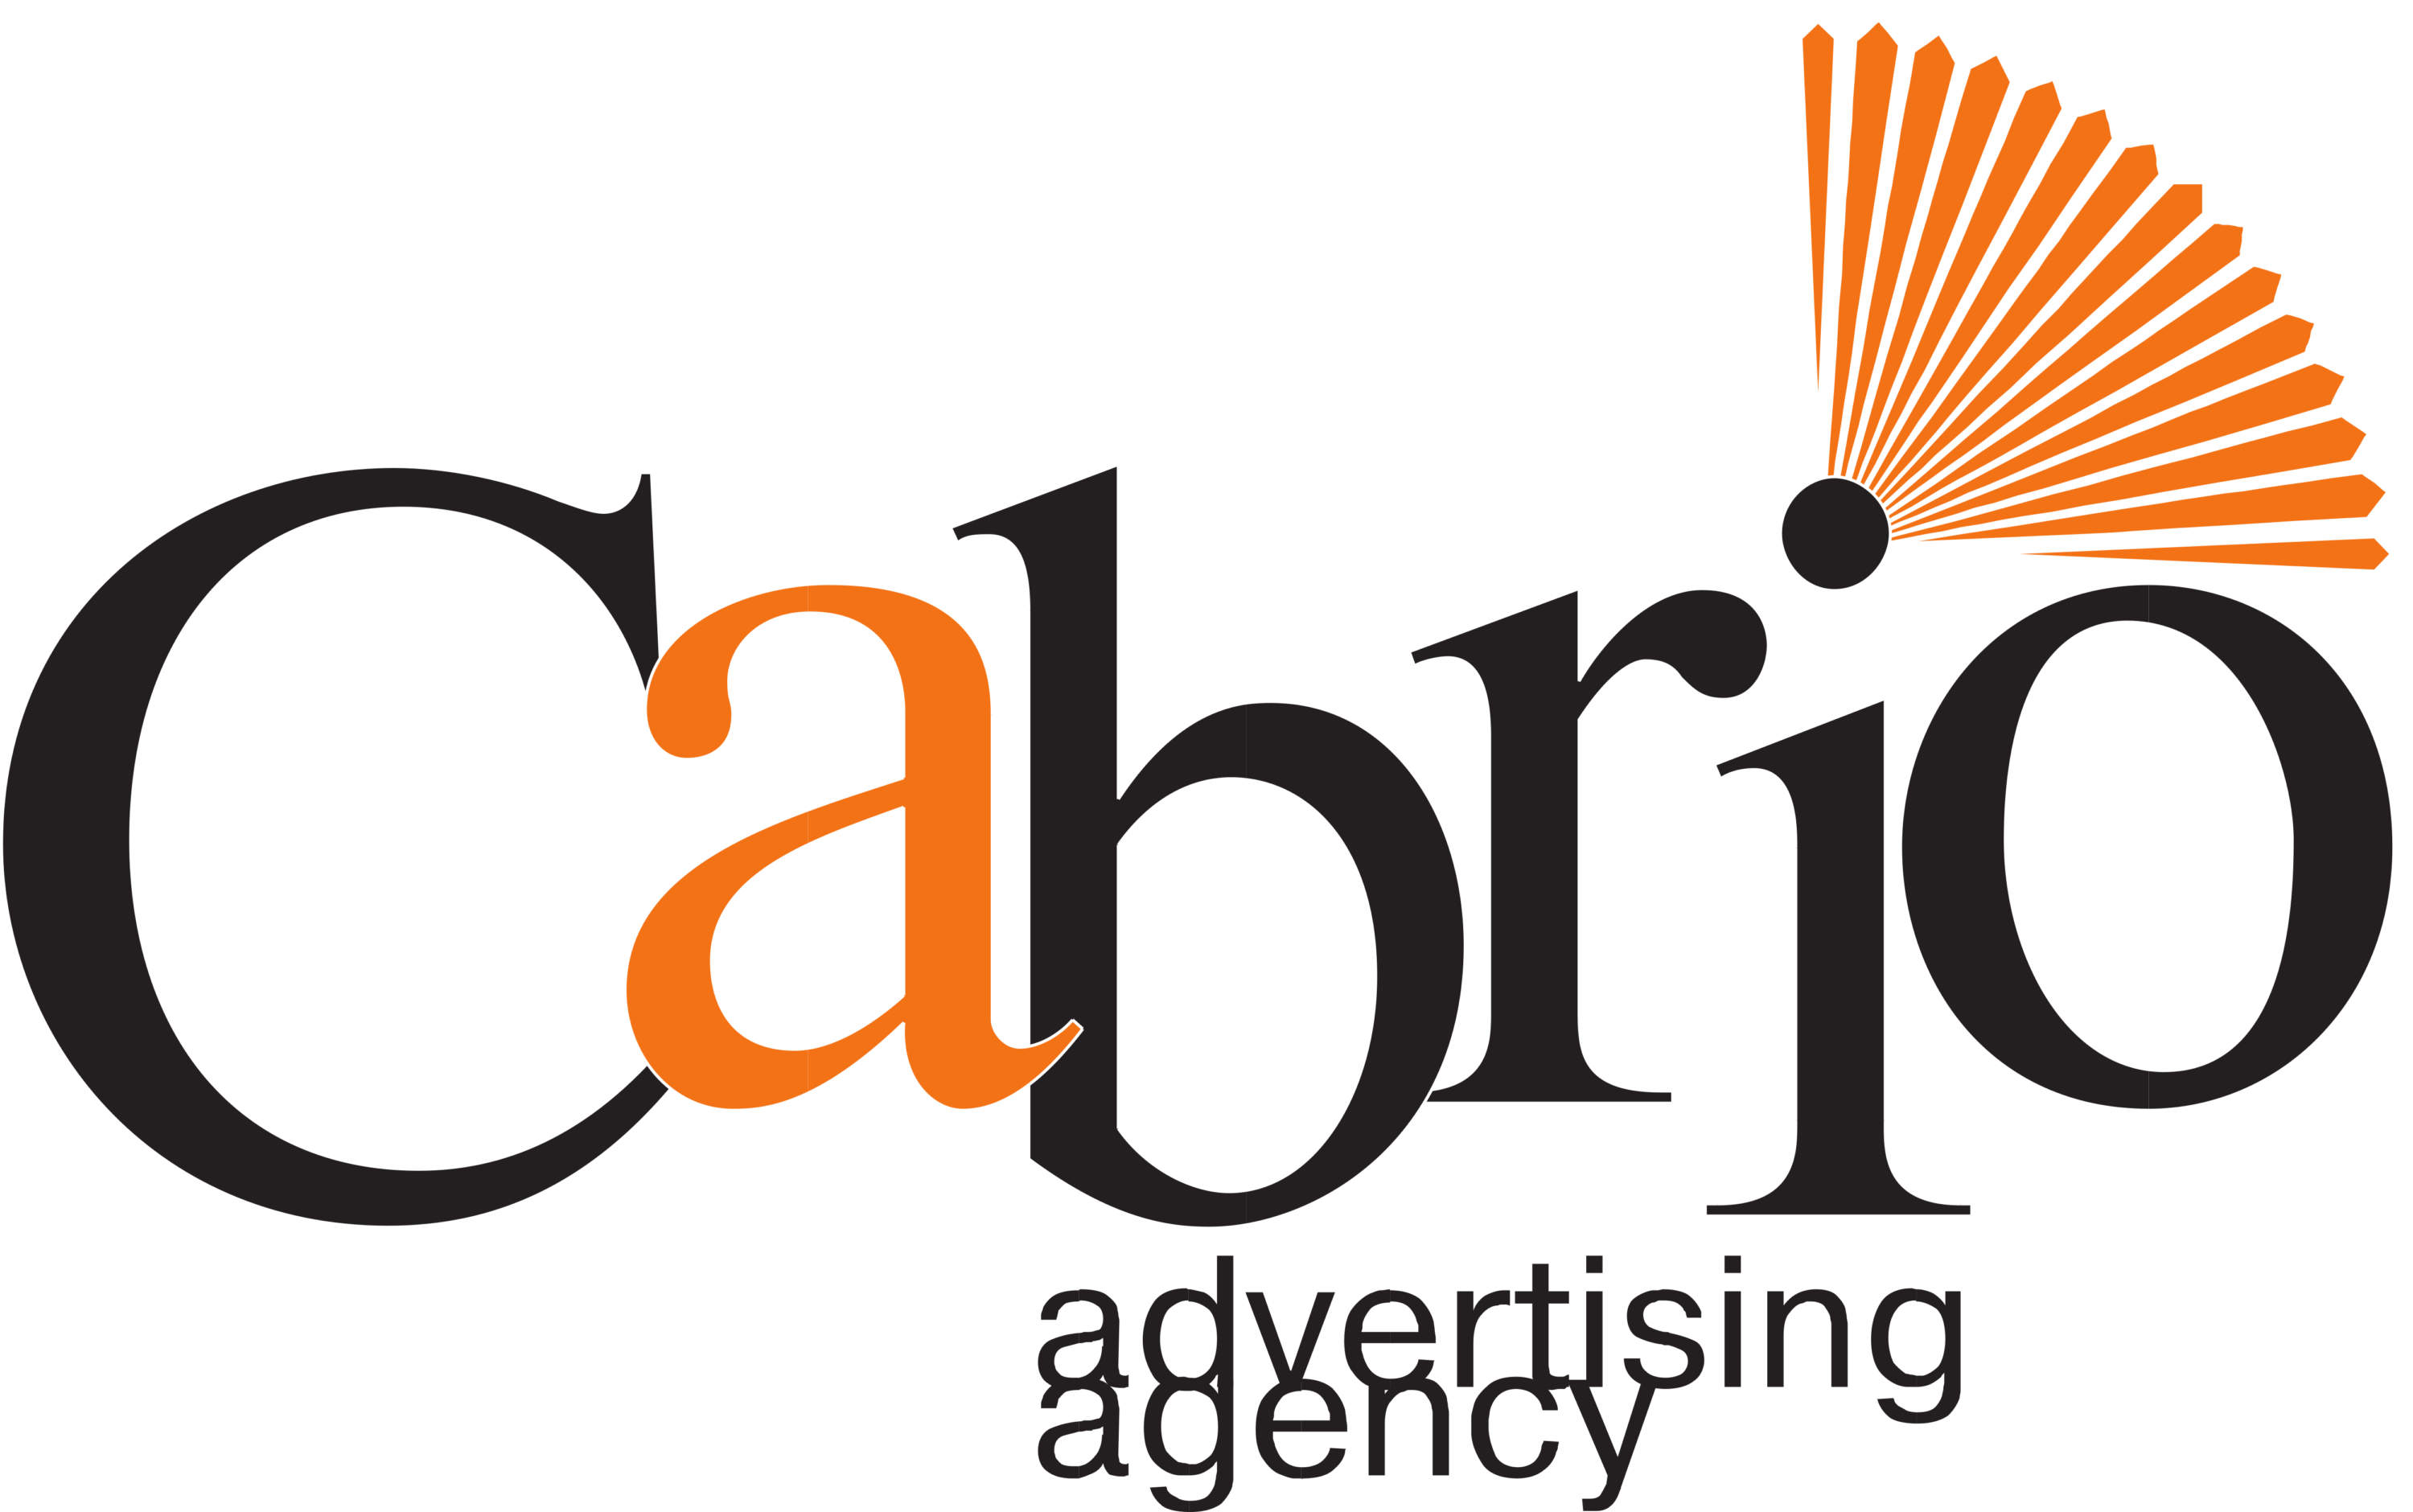 Cabrio Logo